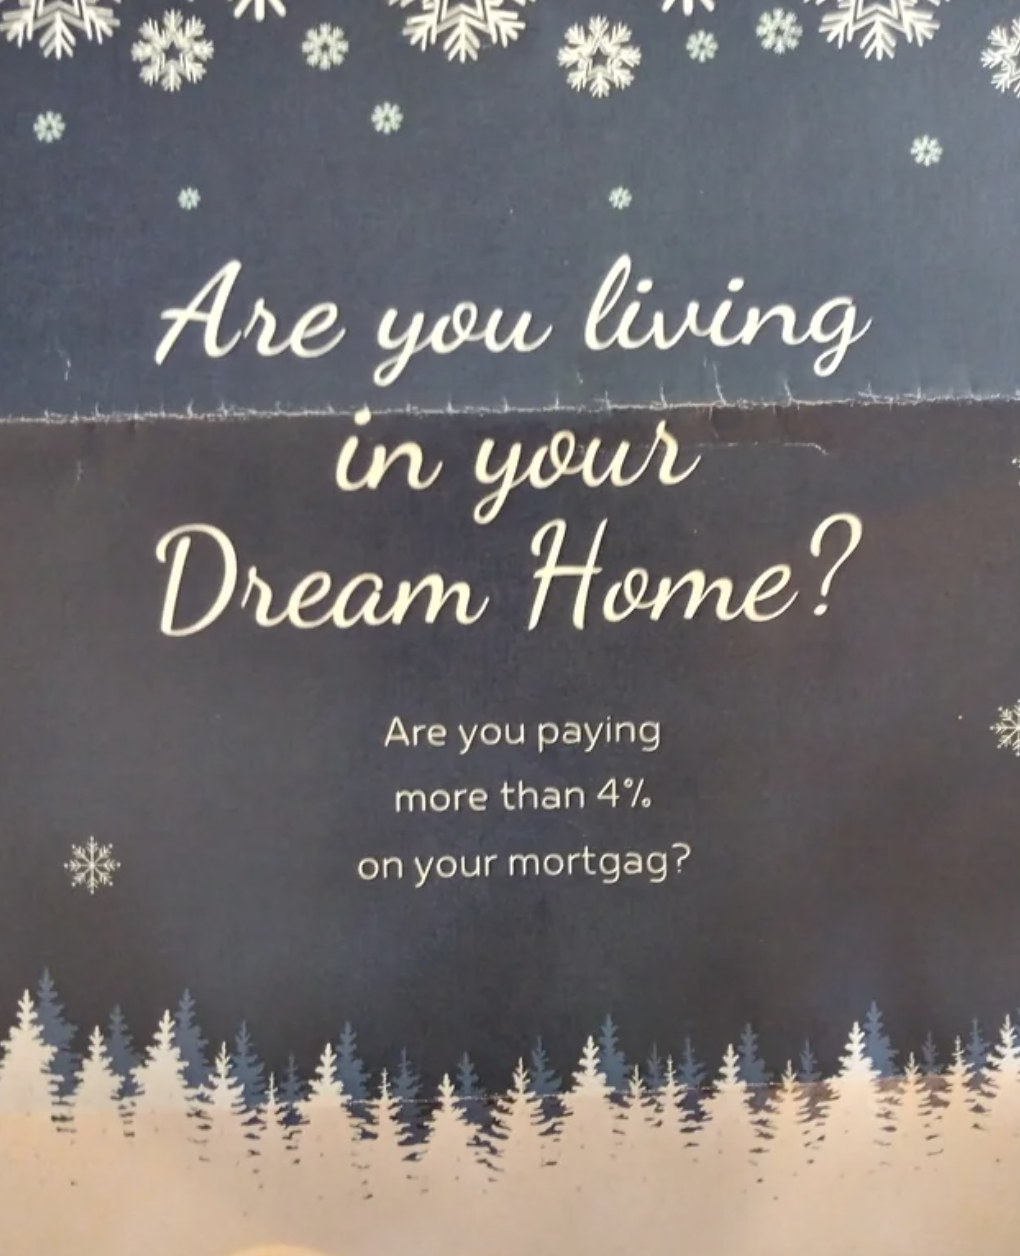 realtor misspells mortgage on their ad